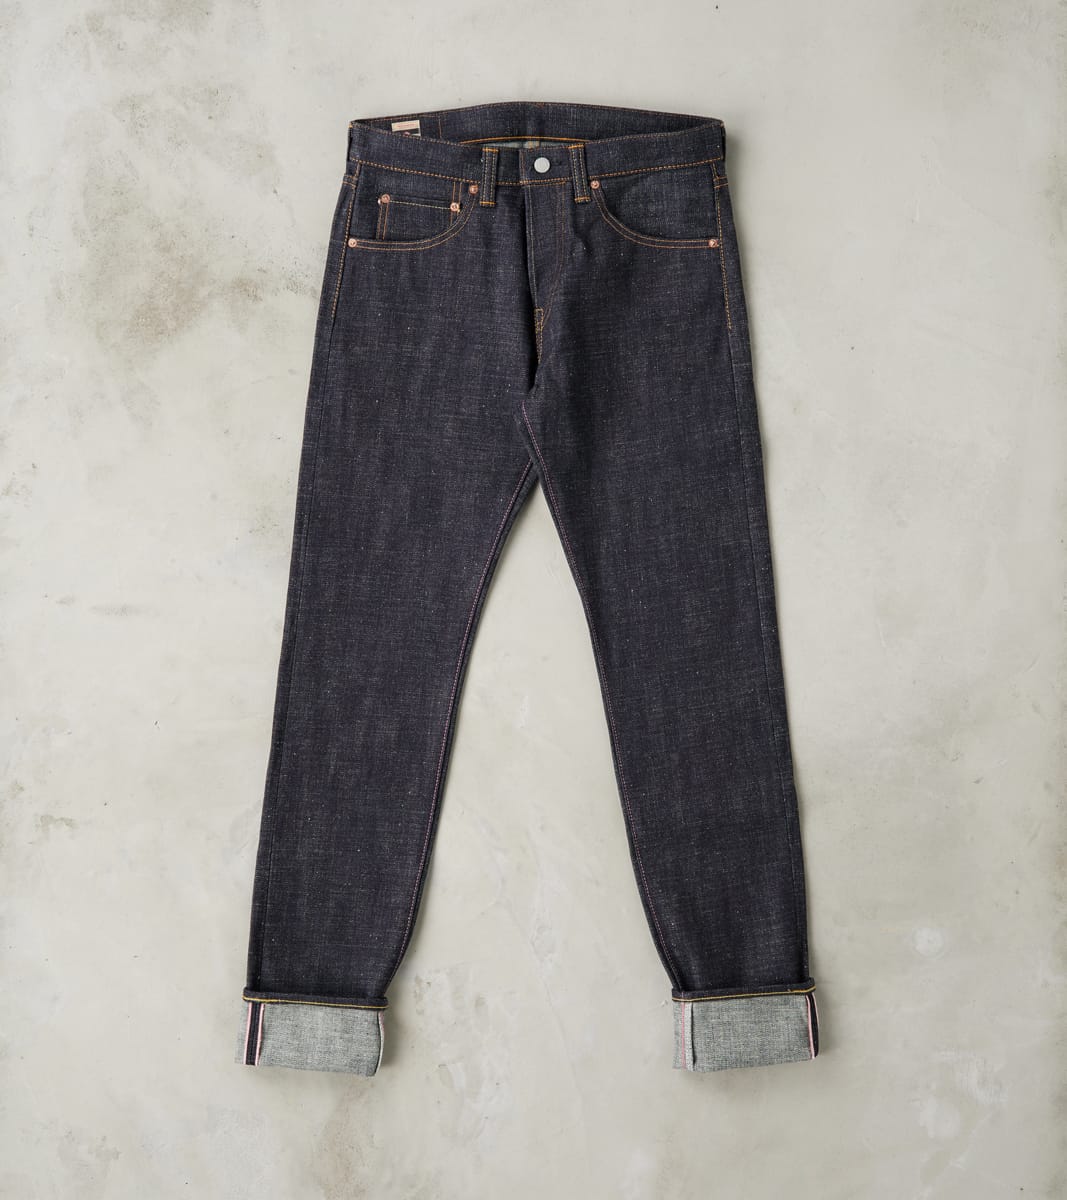 Jacquard Denim 5-Pocket Jeans Size 31